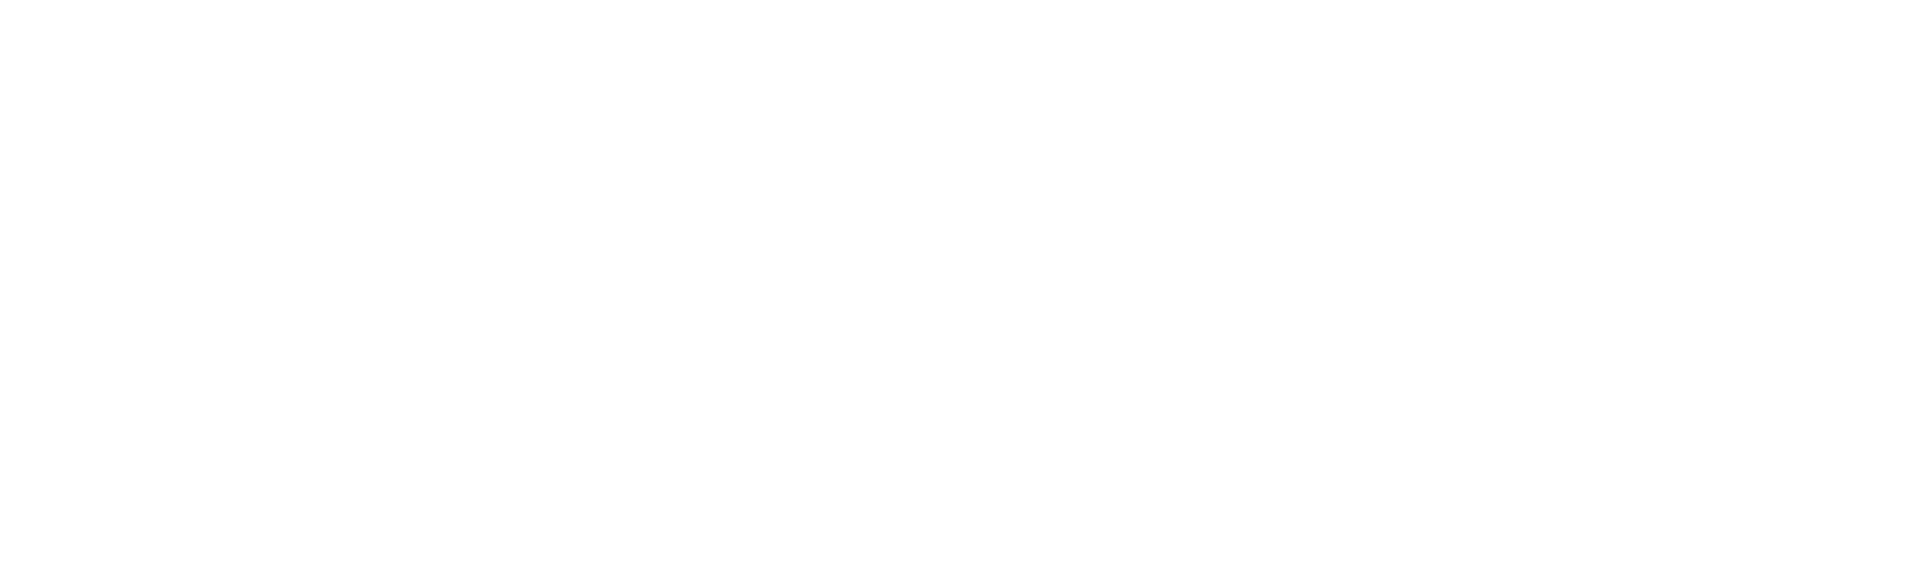 University of Kent International College logo